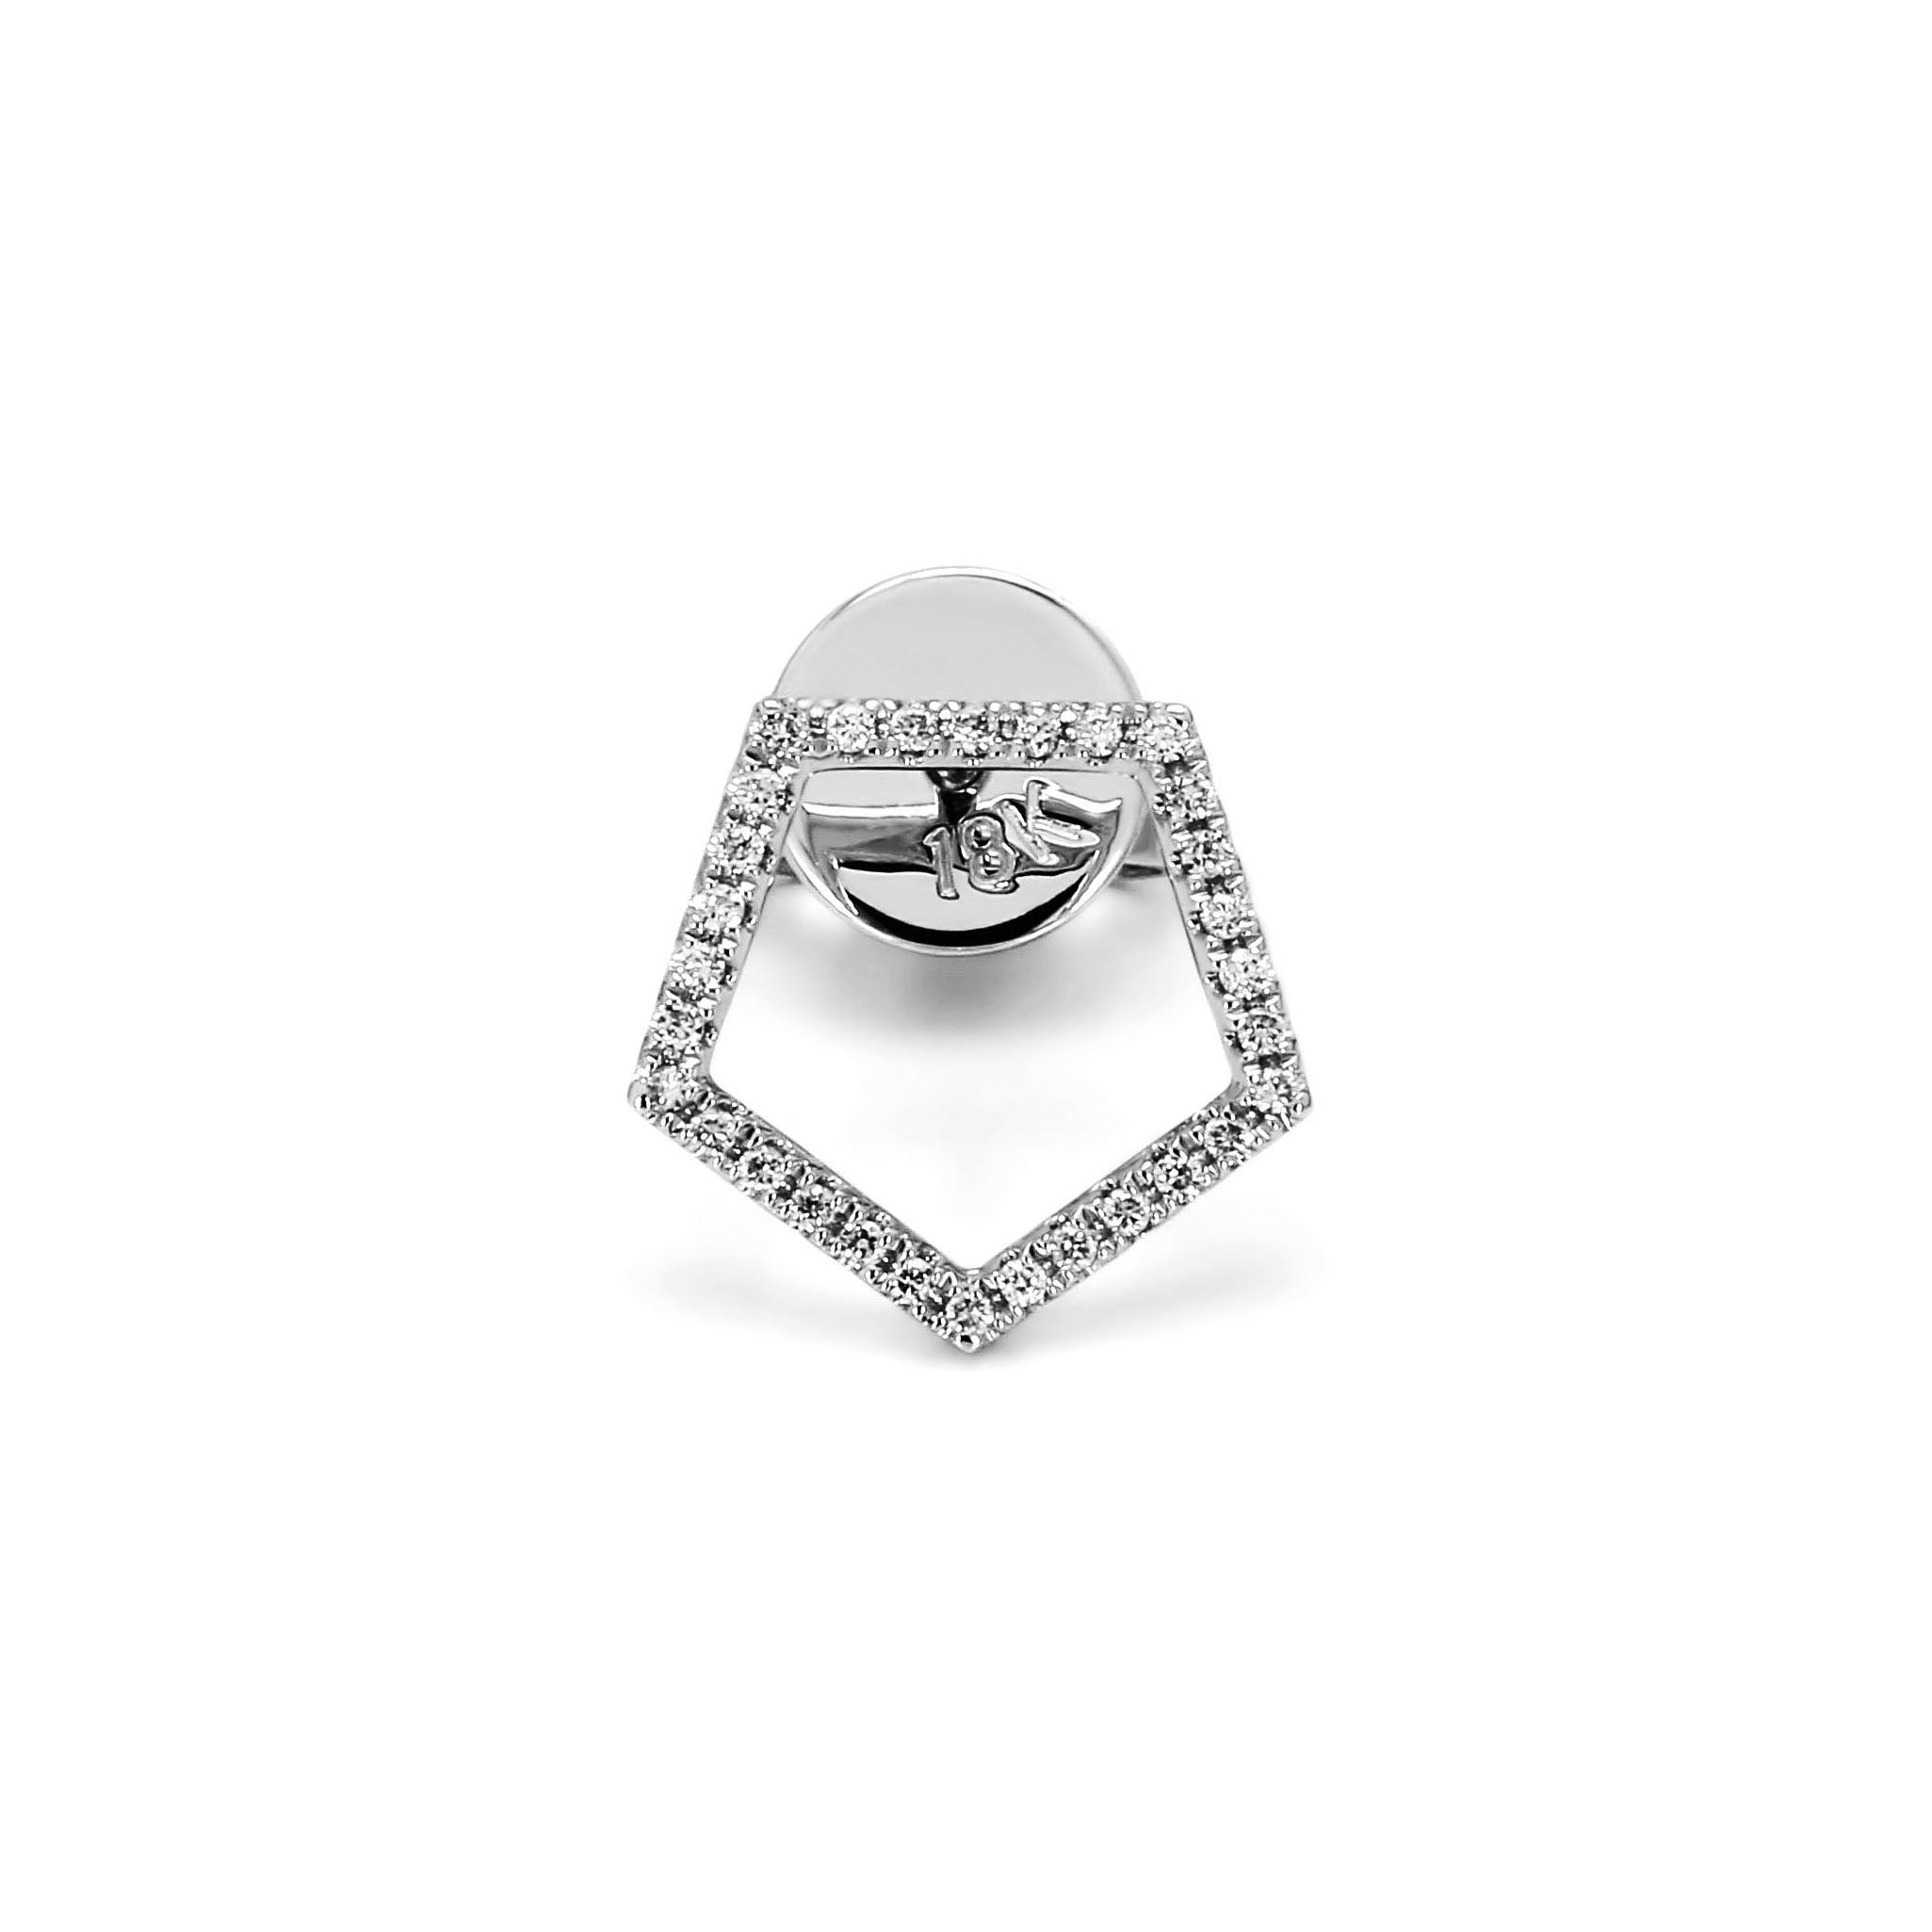 Adamar Jewels LUZ Cielo Single Earring in 18K white gold set with diamonds